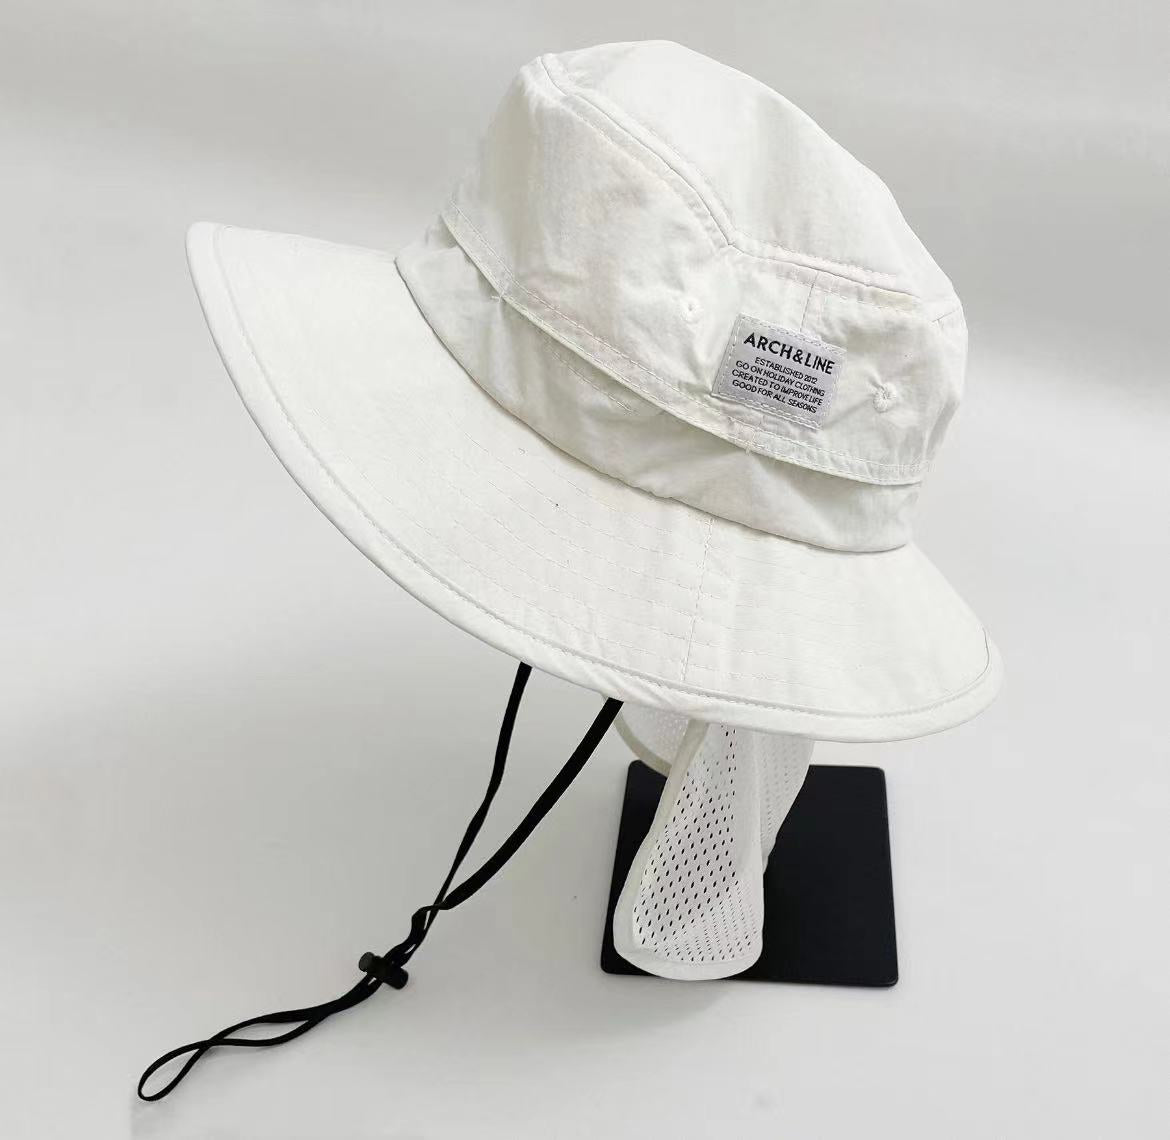 Boys & Girls White Bucket Hat